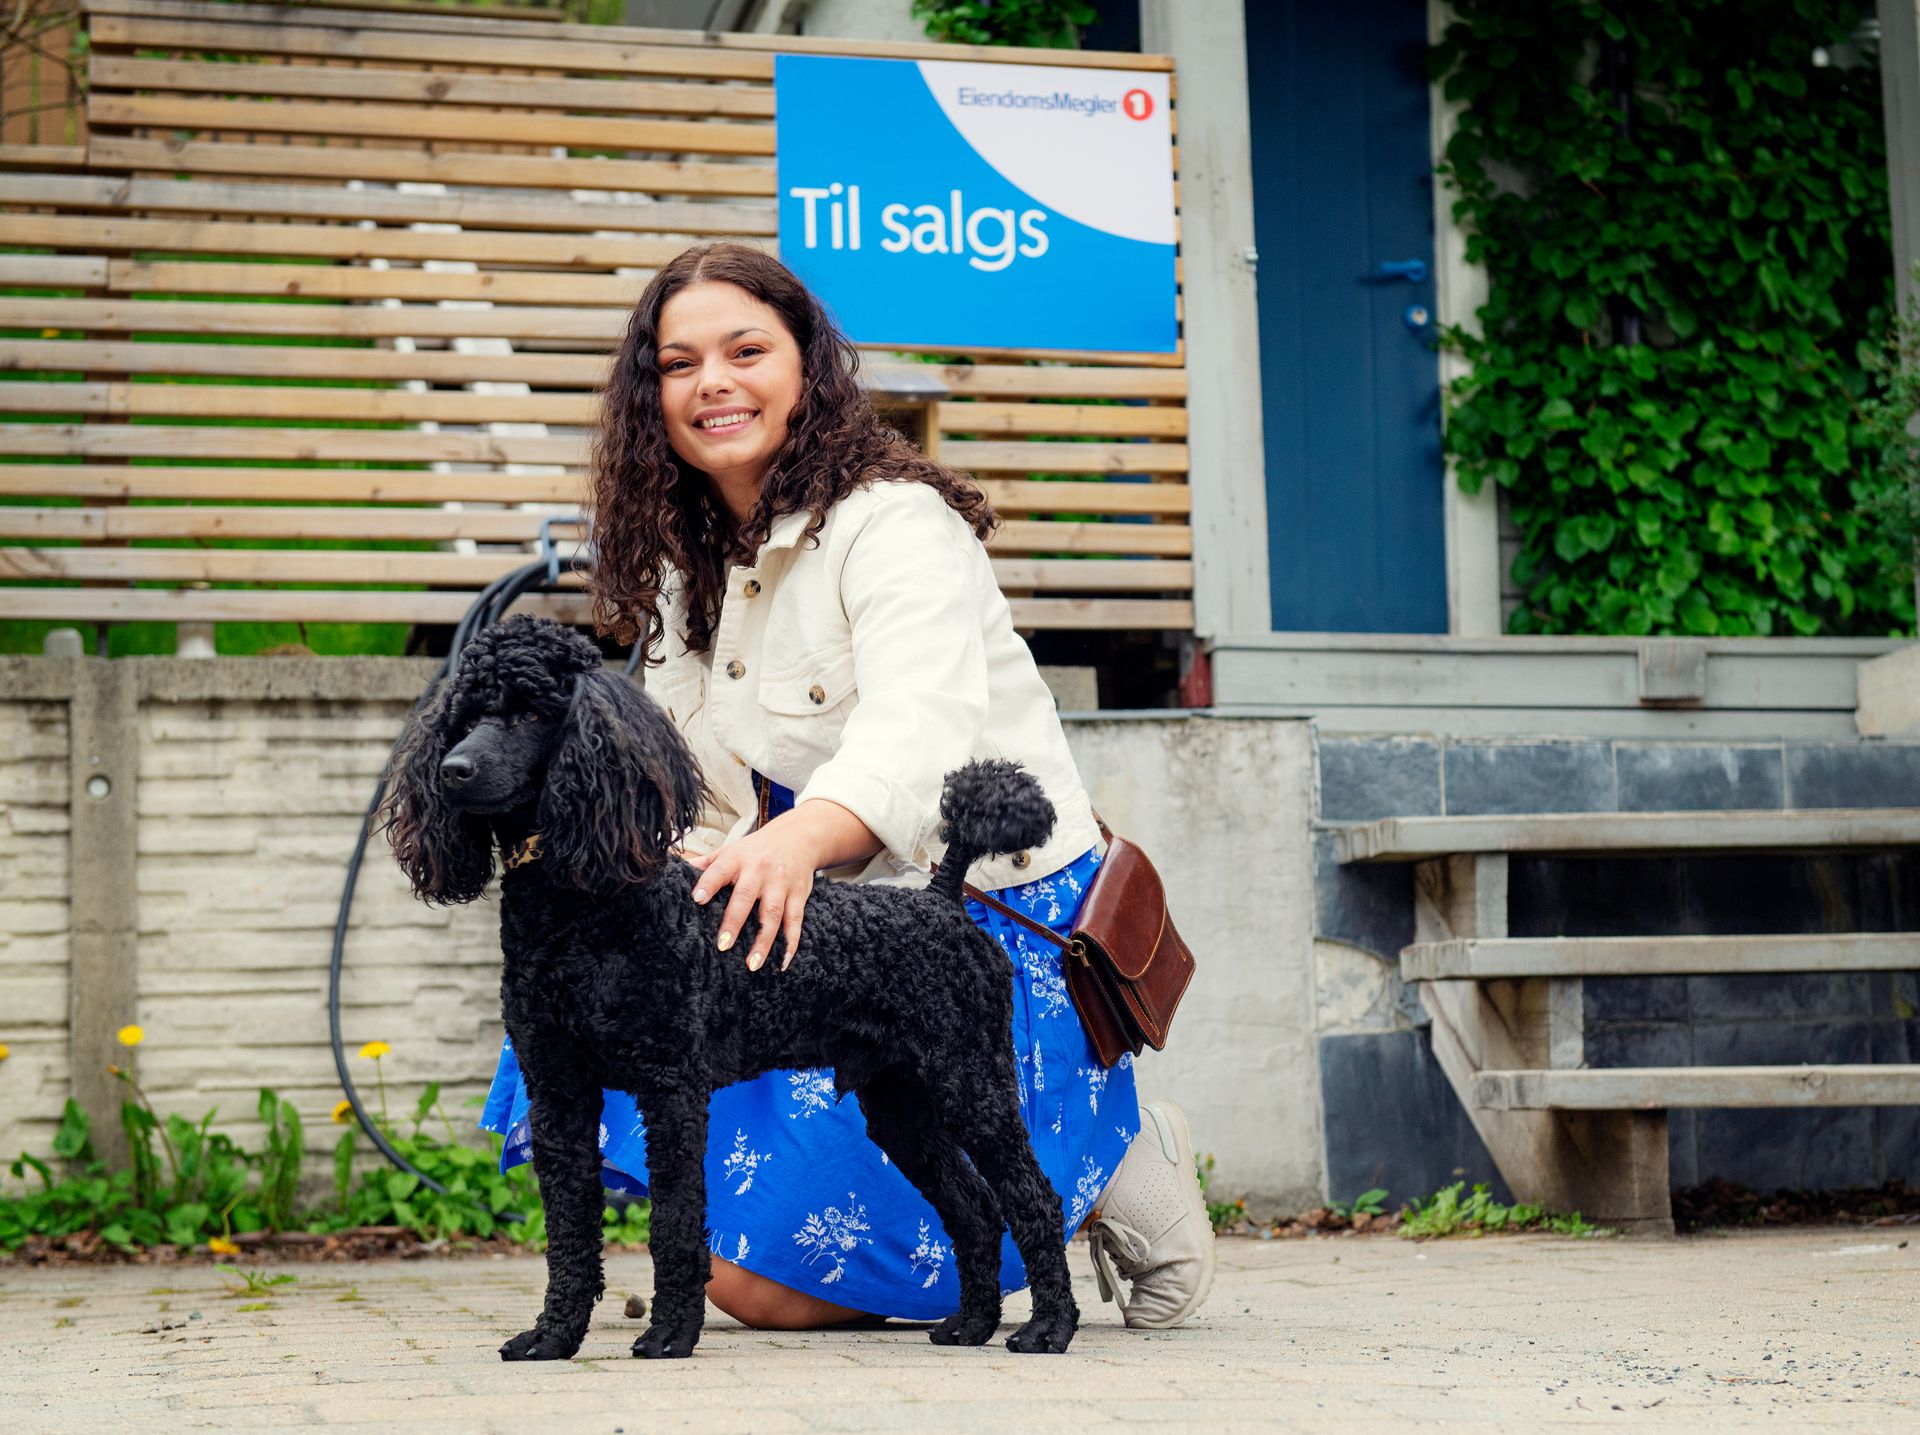 Kvinne sitter på huk sammen med en hund foran et hus med til salgs-skilt. Foto.
